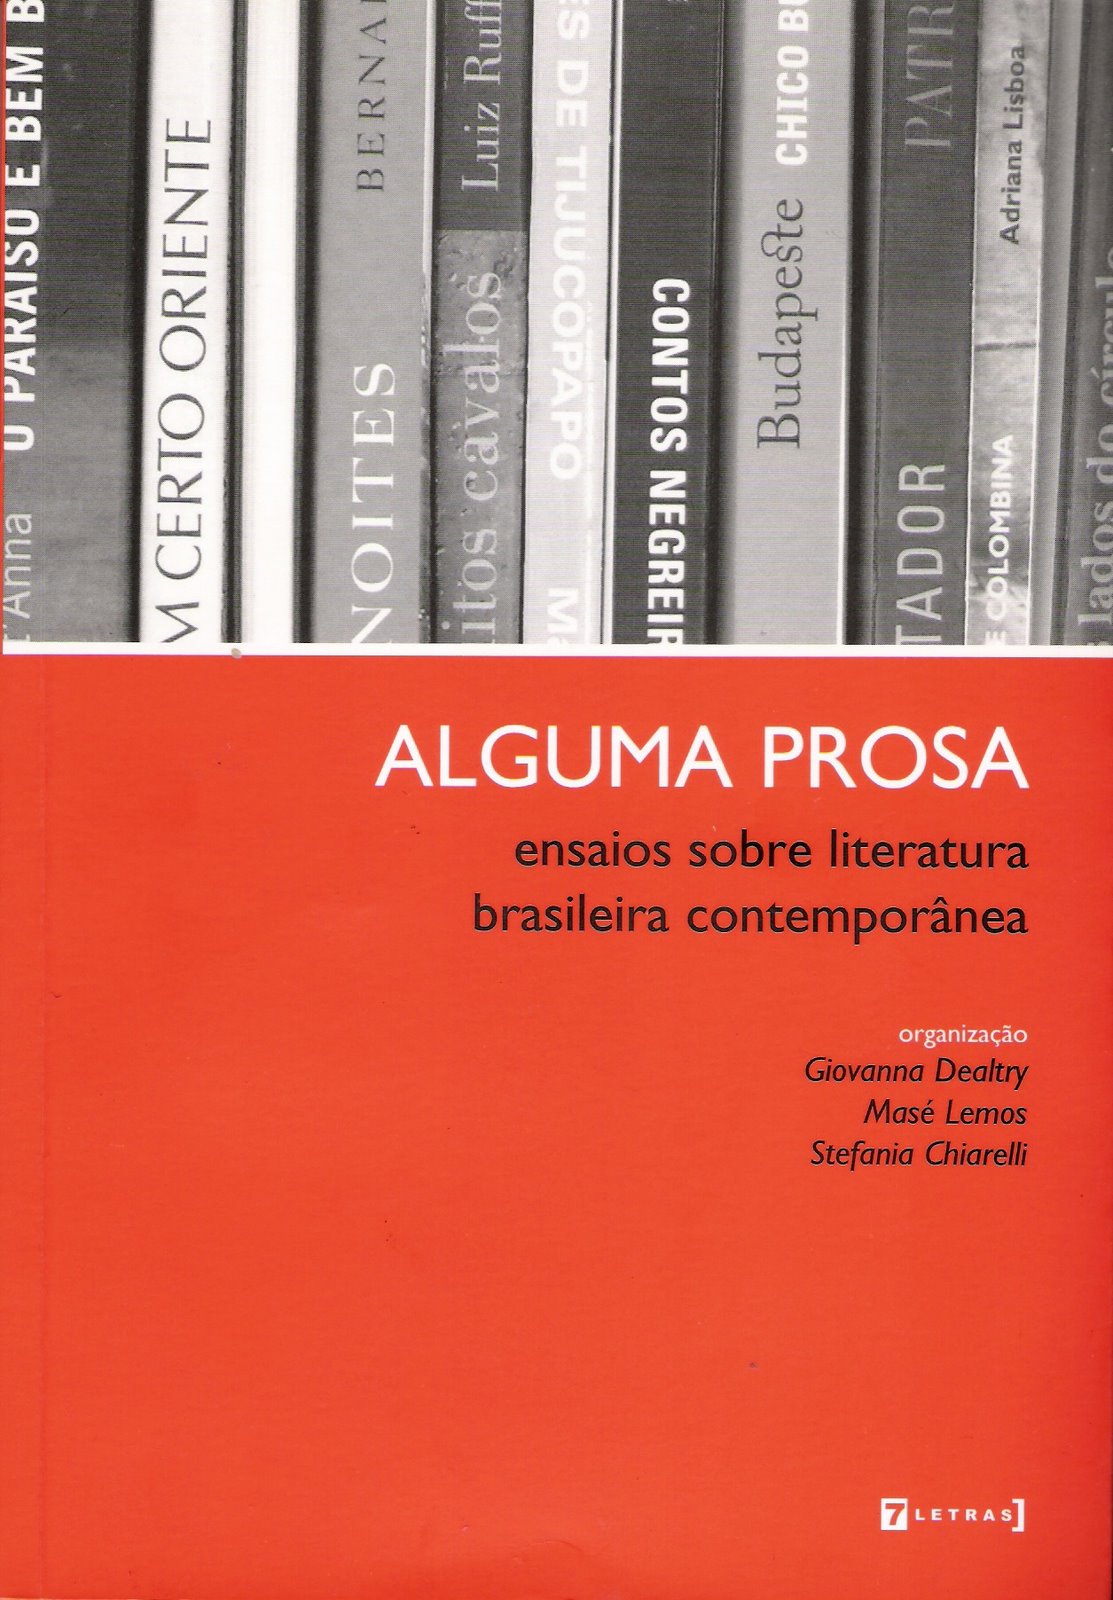 ALGUMA PROSA: ensaios sobre literatura brasileira contemporânea